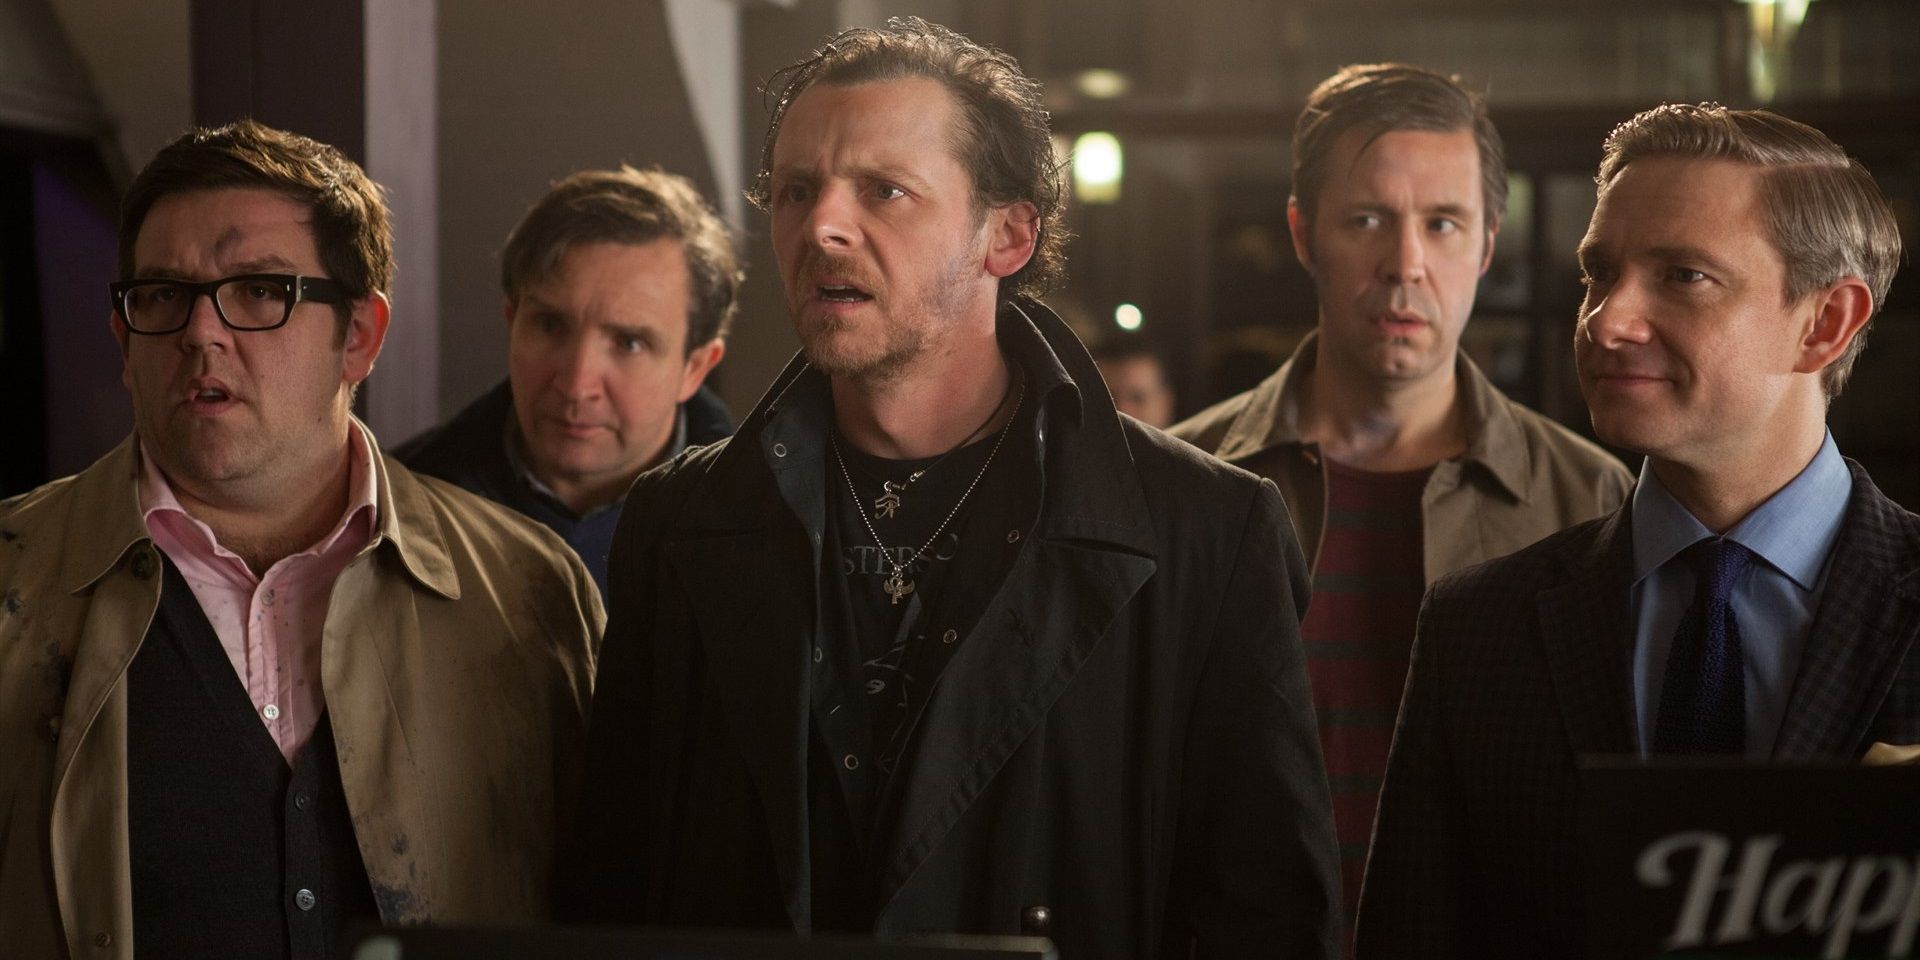 Simon Pegg, Nick Frost, Martin Freeman, Eddie Marsan, and Paddy Considine in The World's End